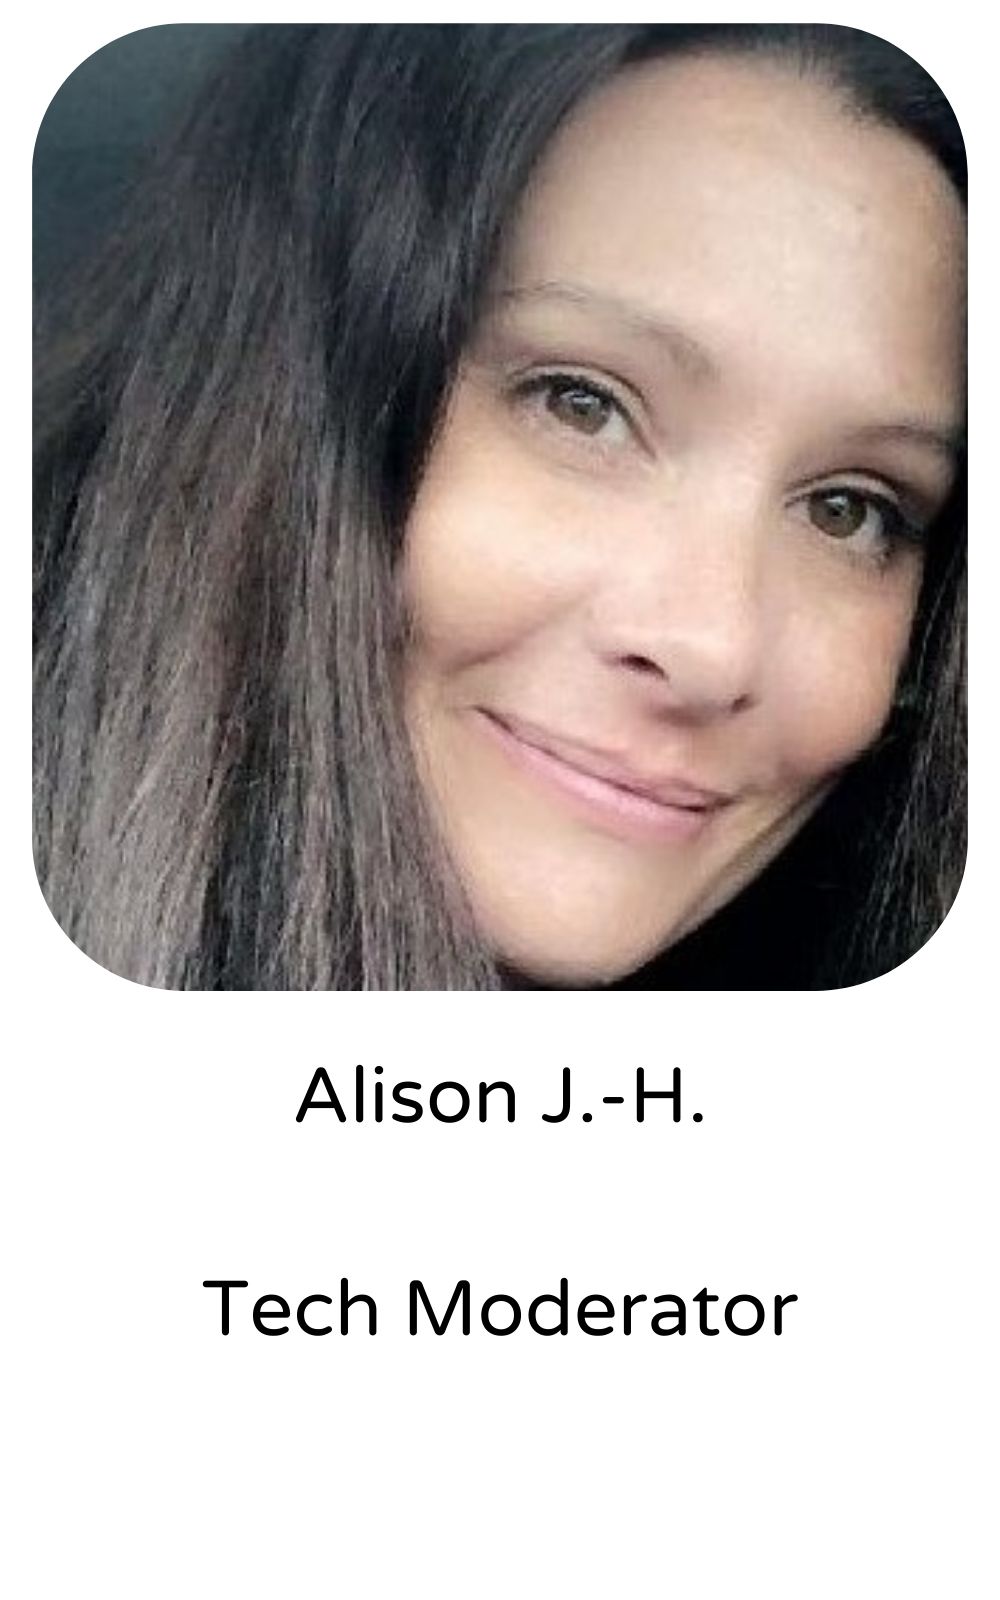 Alison J.H., Tech Moderator